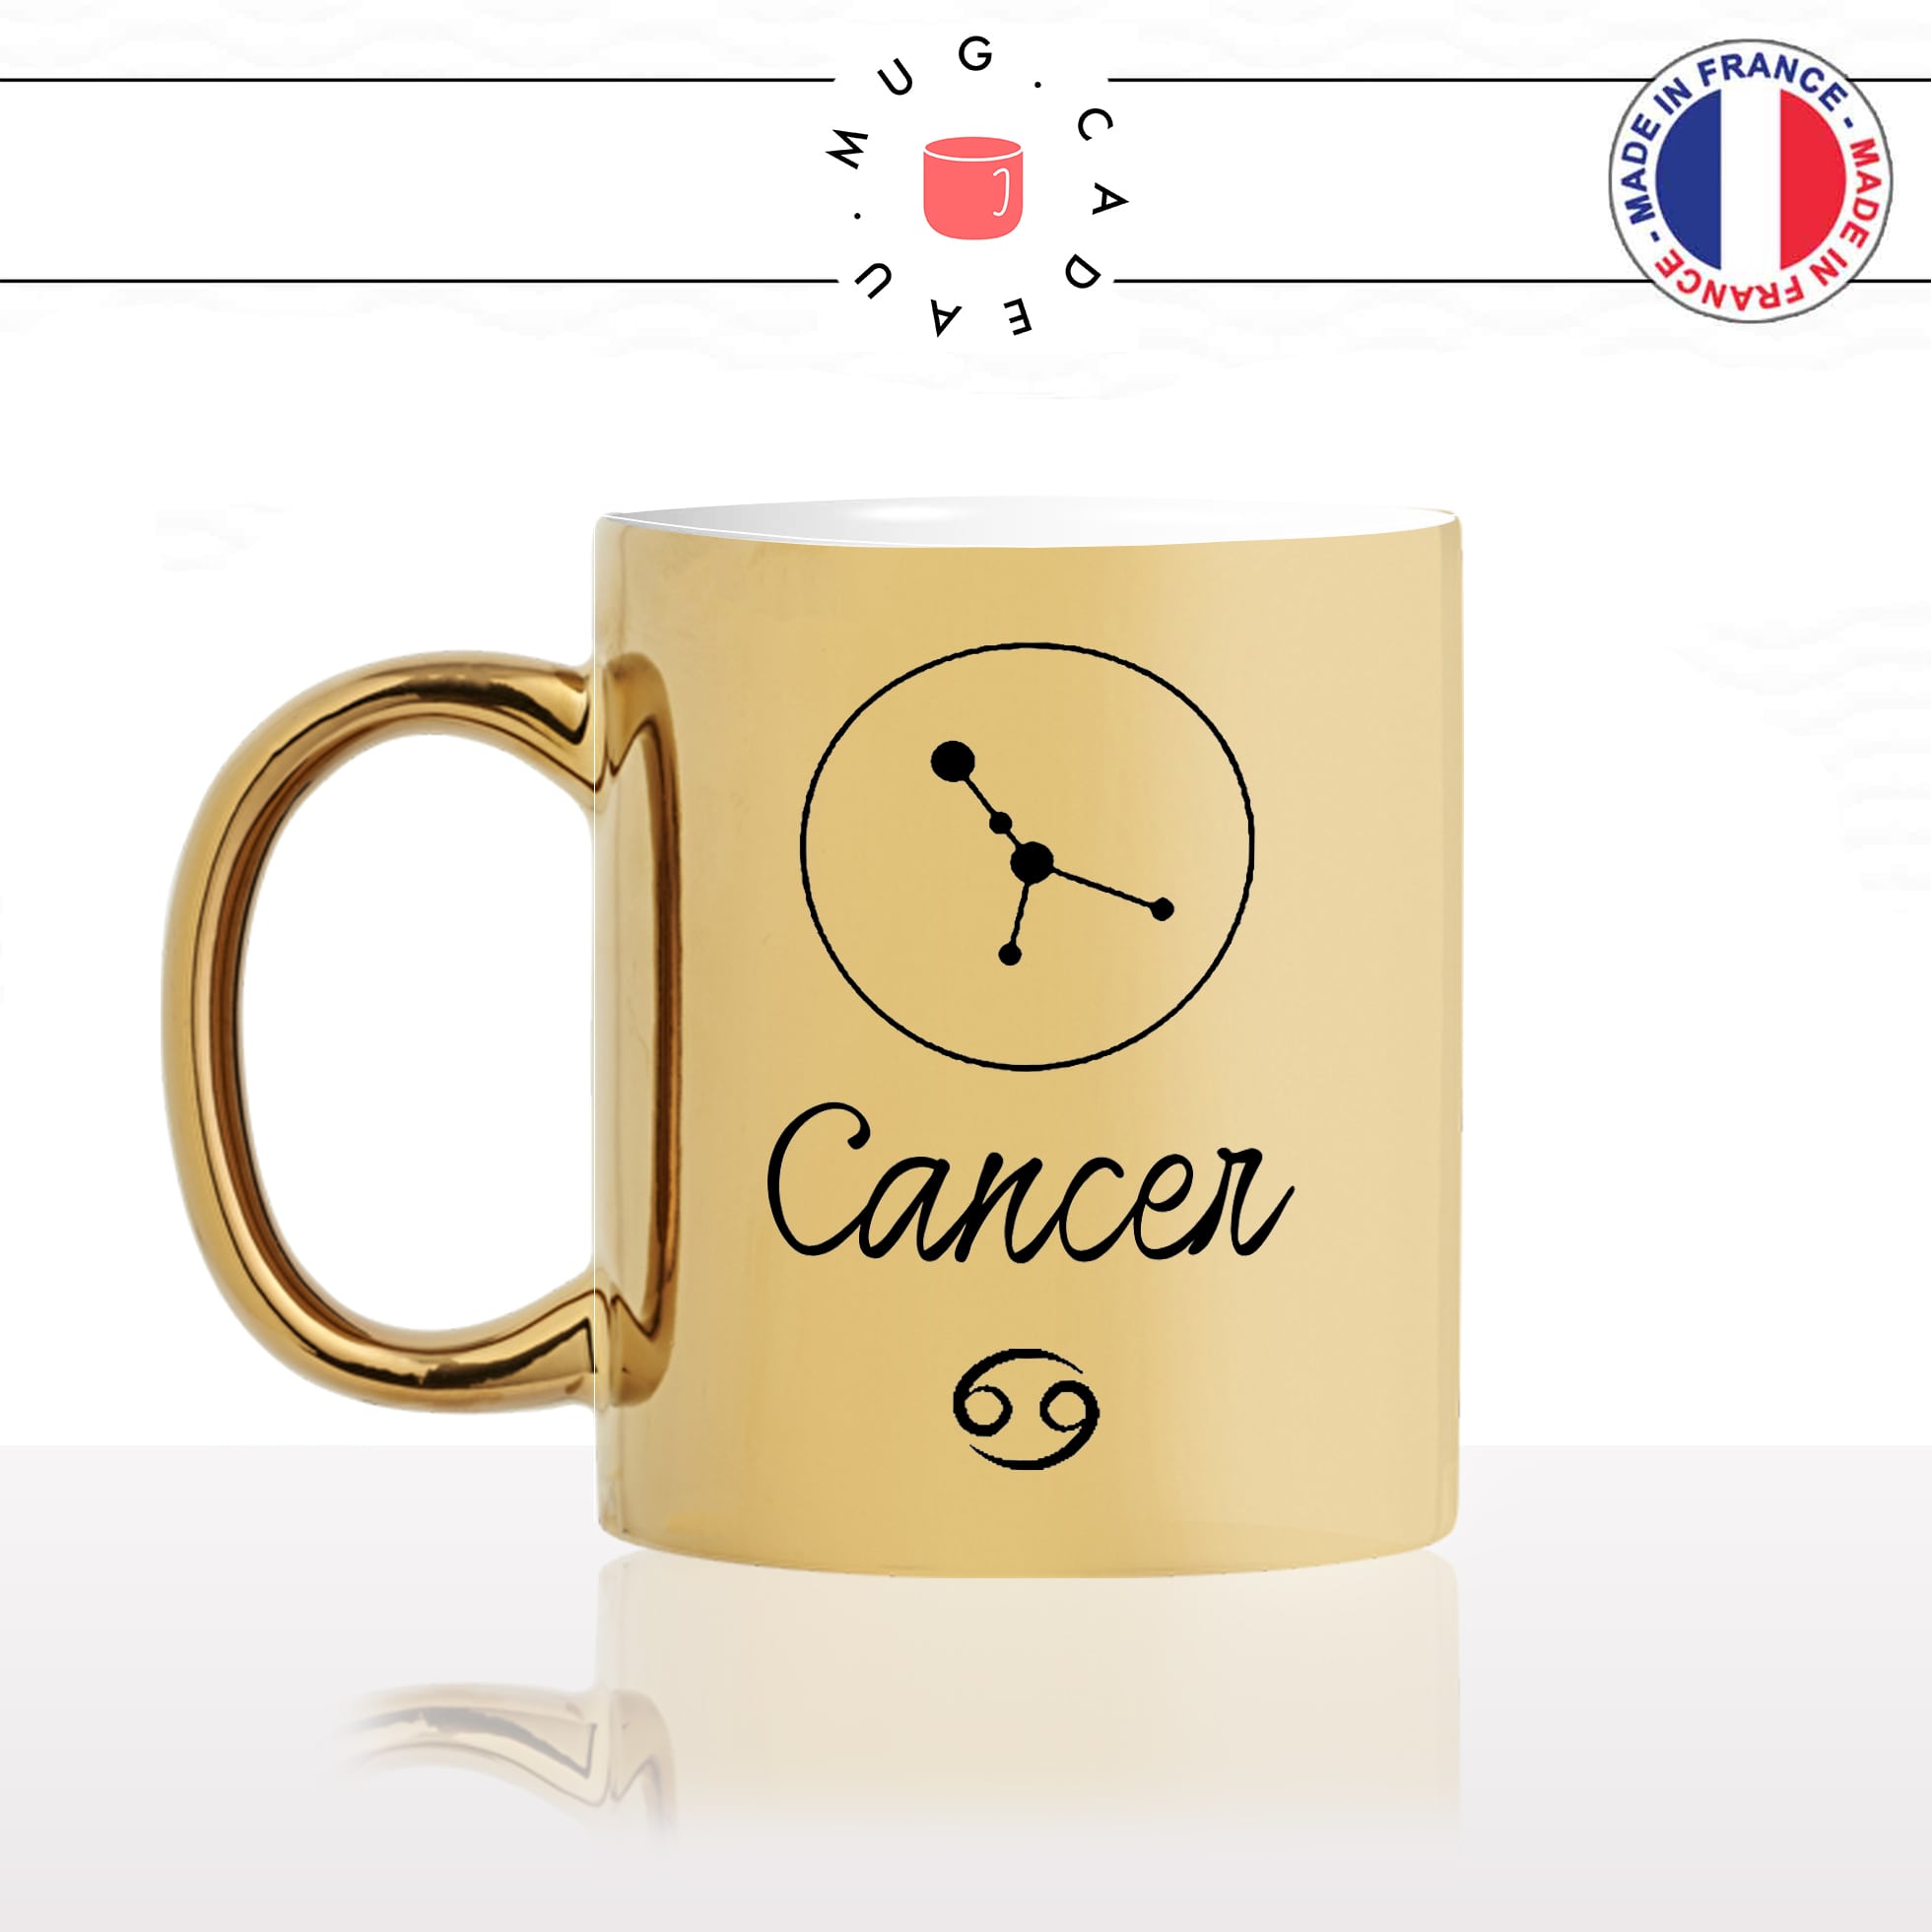 mug-tasse-or-doré-gold-signe-astrologique-astro-horoscope-cancer-étoiles-constellation-ciel-fun-idée-cadeau-originale-personnalisé-min